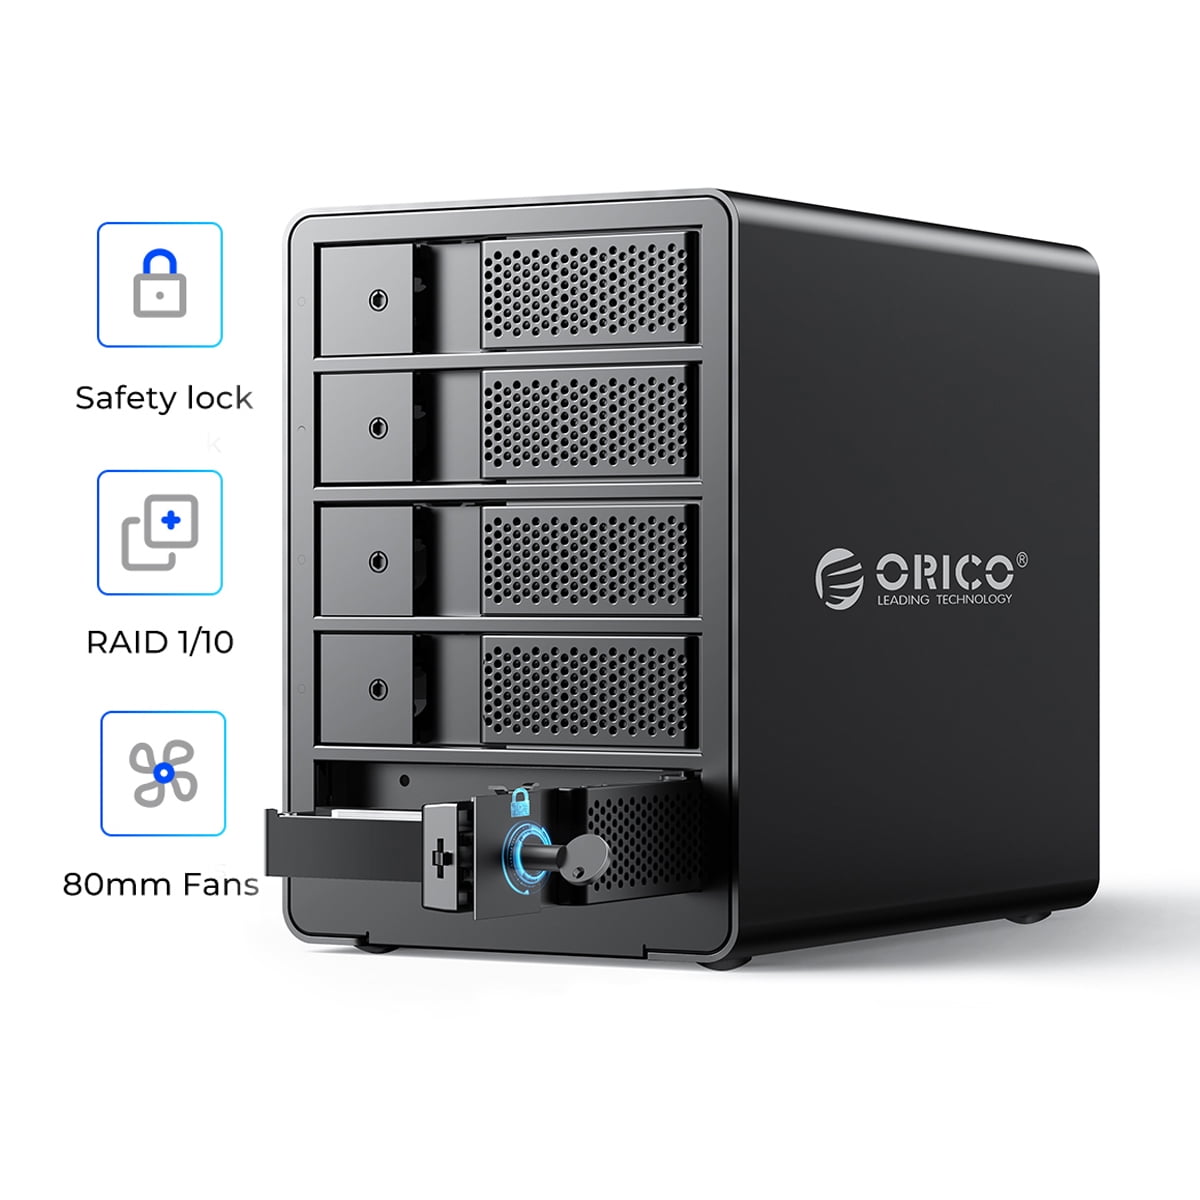 Orico Lecteur SSD 3.5 INCH transparent USB3.0 HARD DRIVE DOCK – Abchir